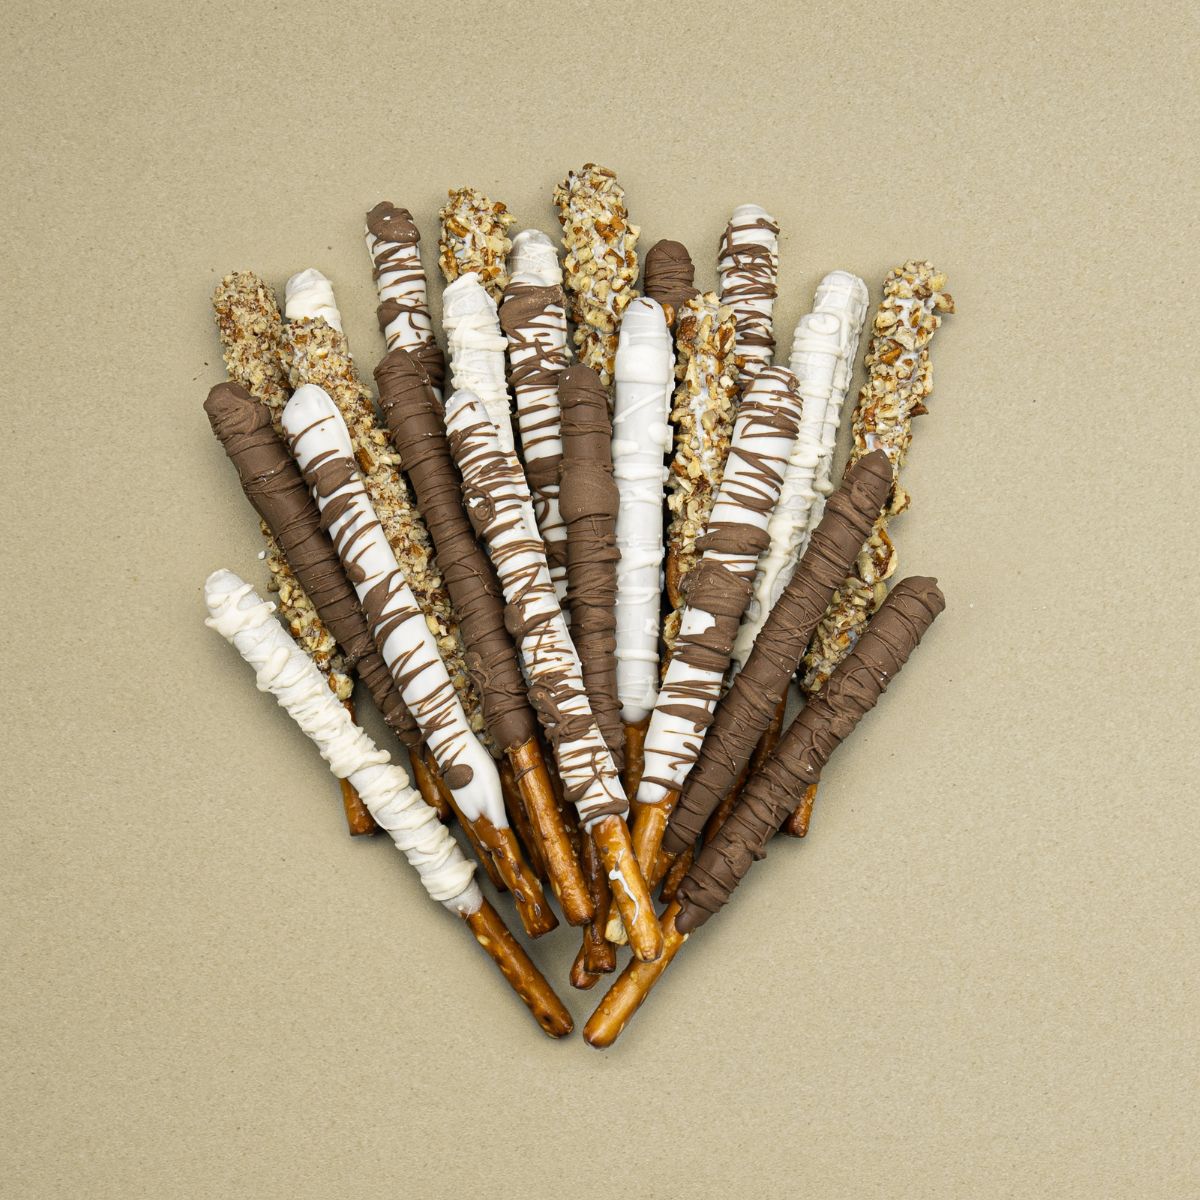 24 pack Chocolate Drizzled Gourmet Pretzel Sticks